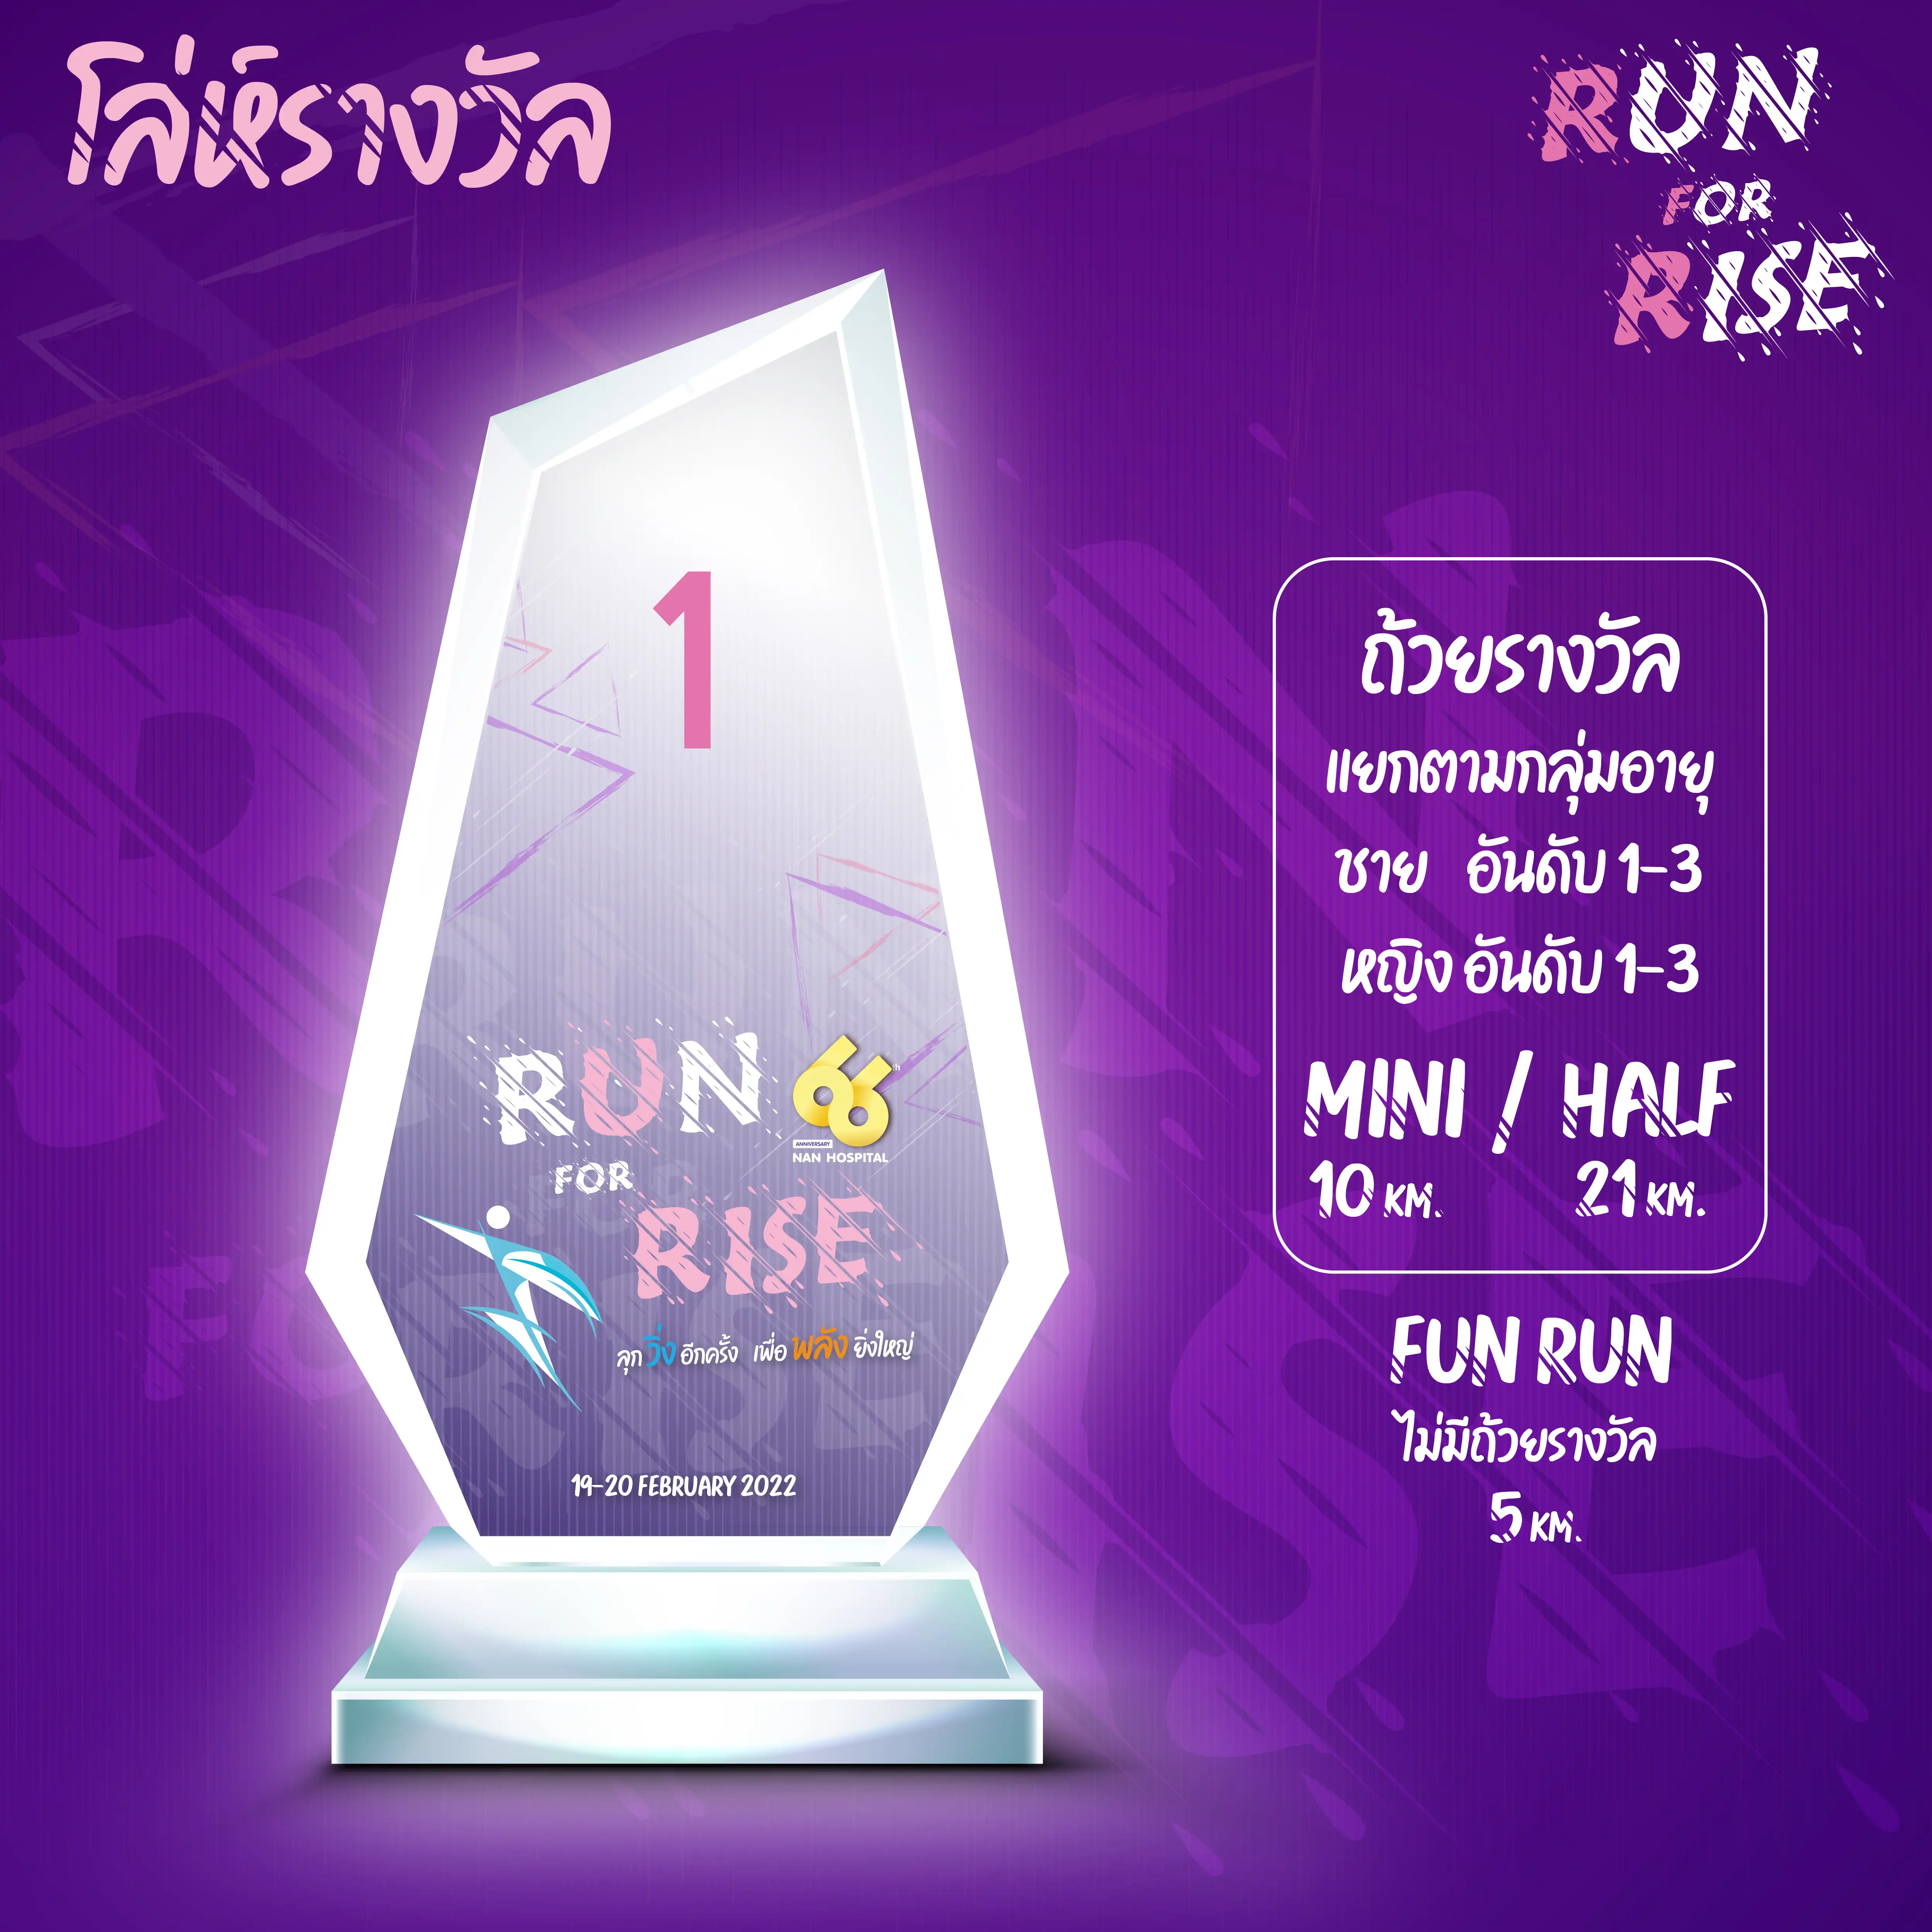 RUN FOR RISE : ลุกวิ่งอีกครั้ง เพื่อพลังยิ่งใหญ่" ปี 2565 วิ่งฉลองครบรอบ 66 ปี รพ.น่าน  HealthServ